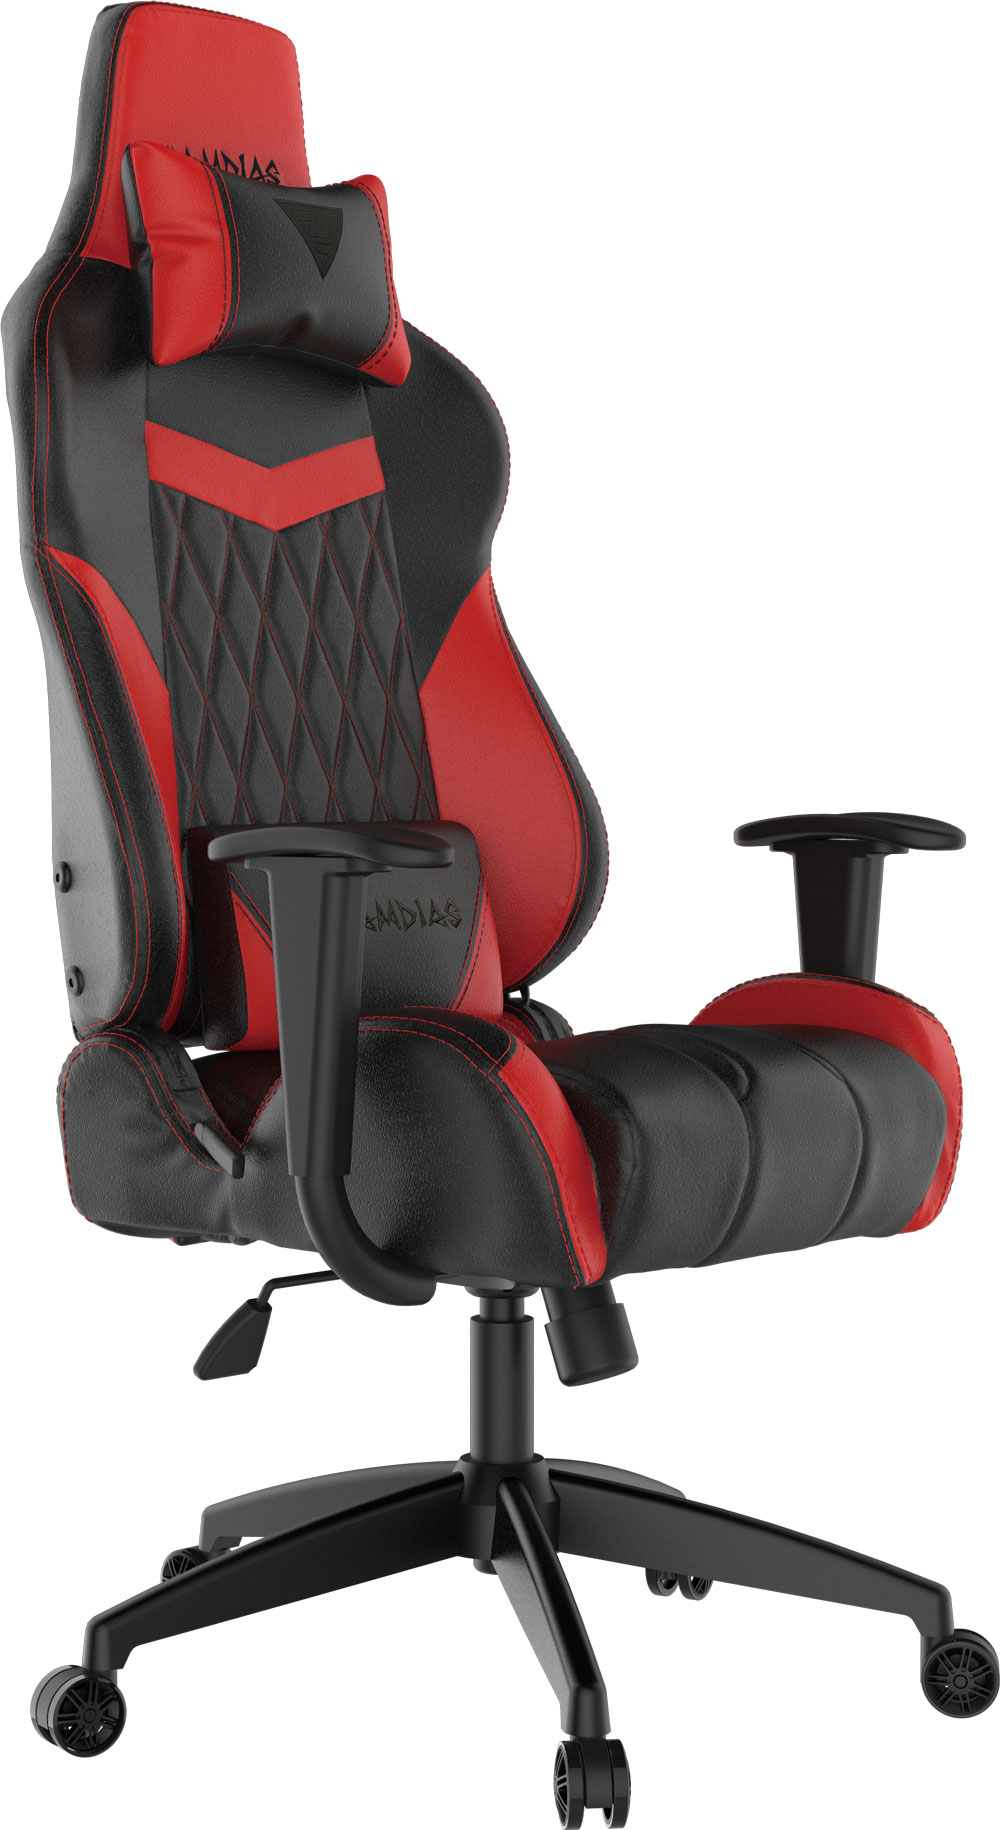 Gamdias Achilles E2 Gaming Chair - Black/Red